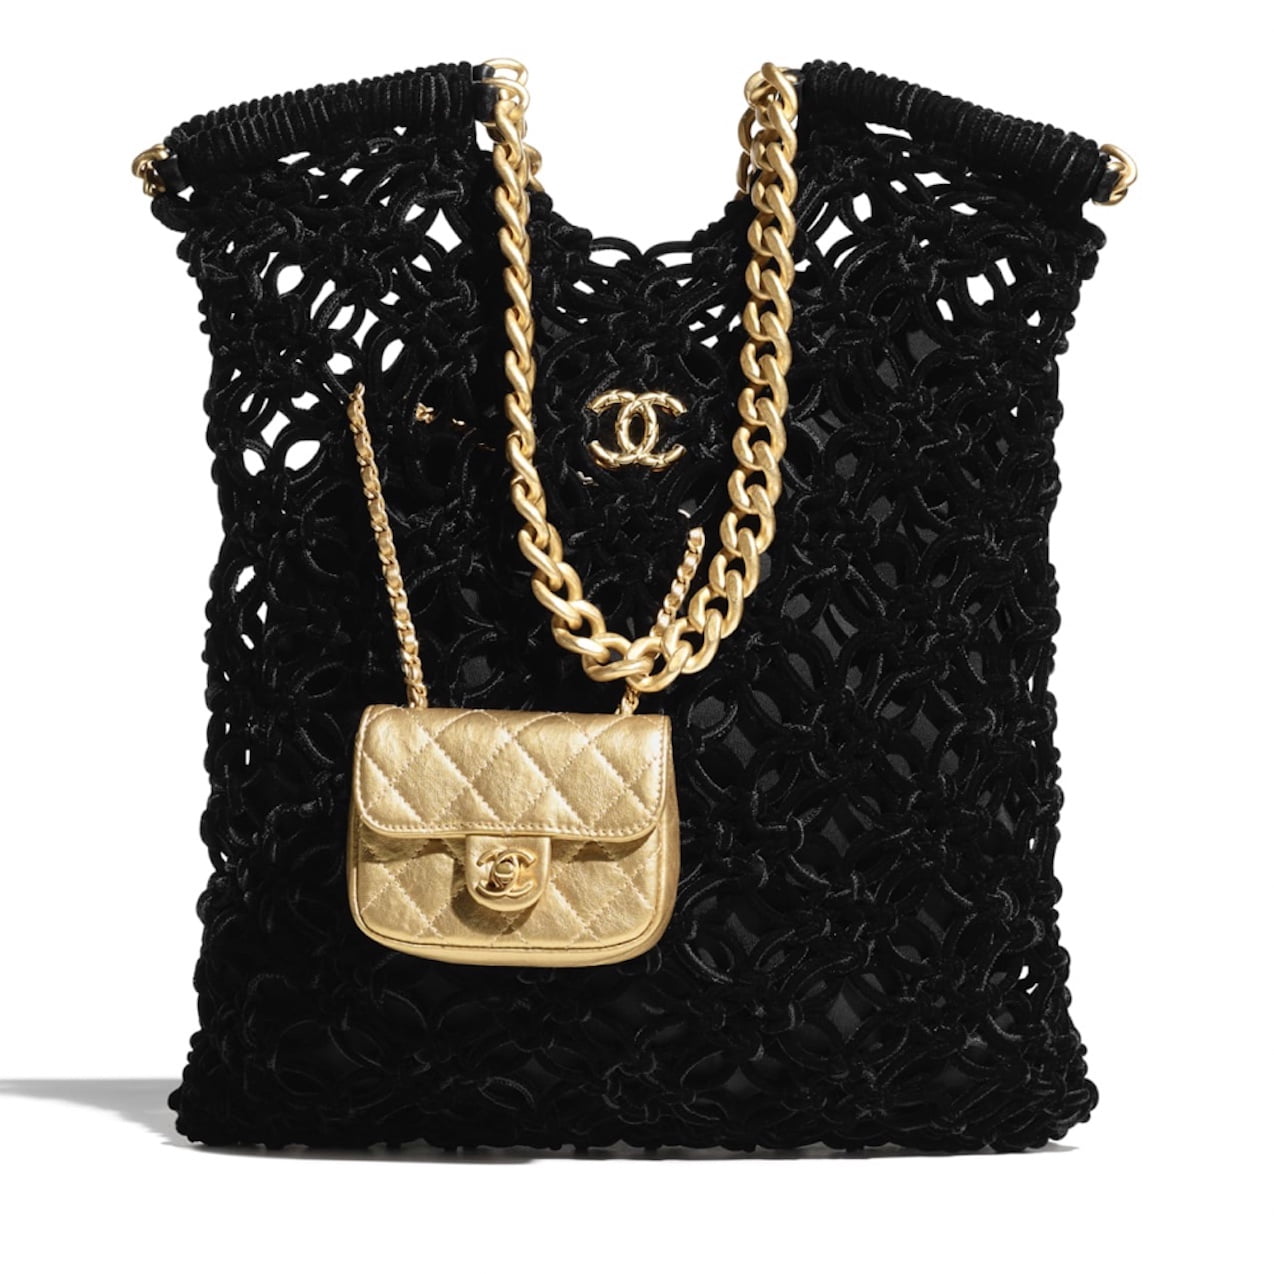 A peek into Chanel's Fall 2020 Handbag collection.